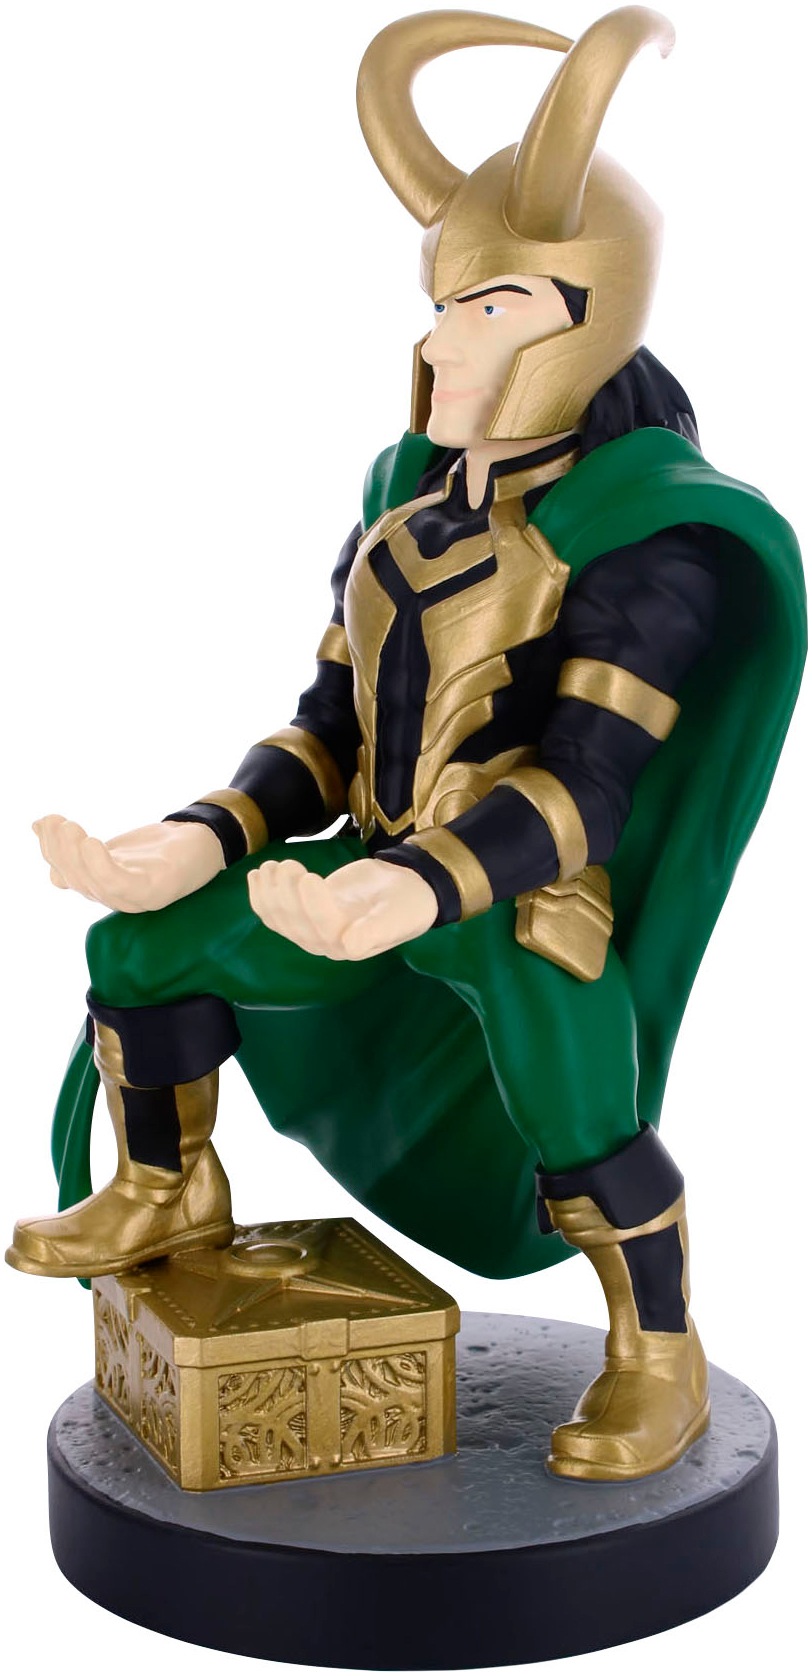 NBG Spielfigur »Cable Guy- Loki«, (1 tlg.)